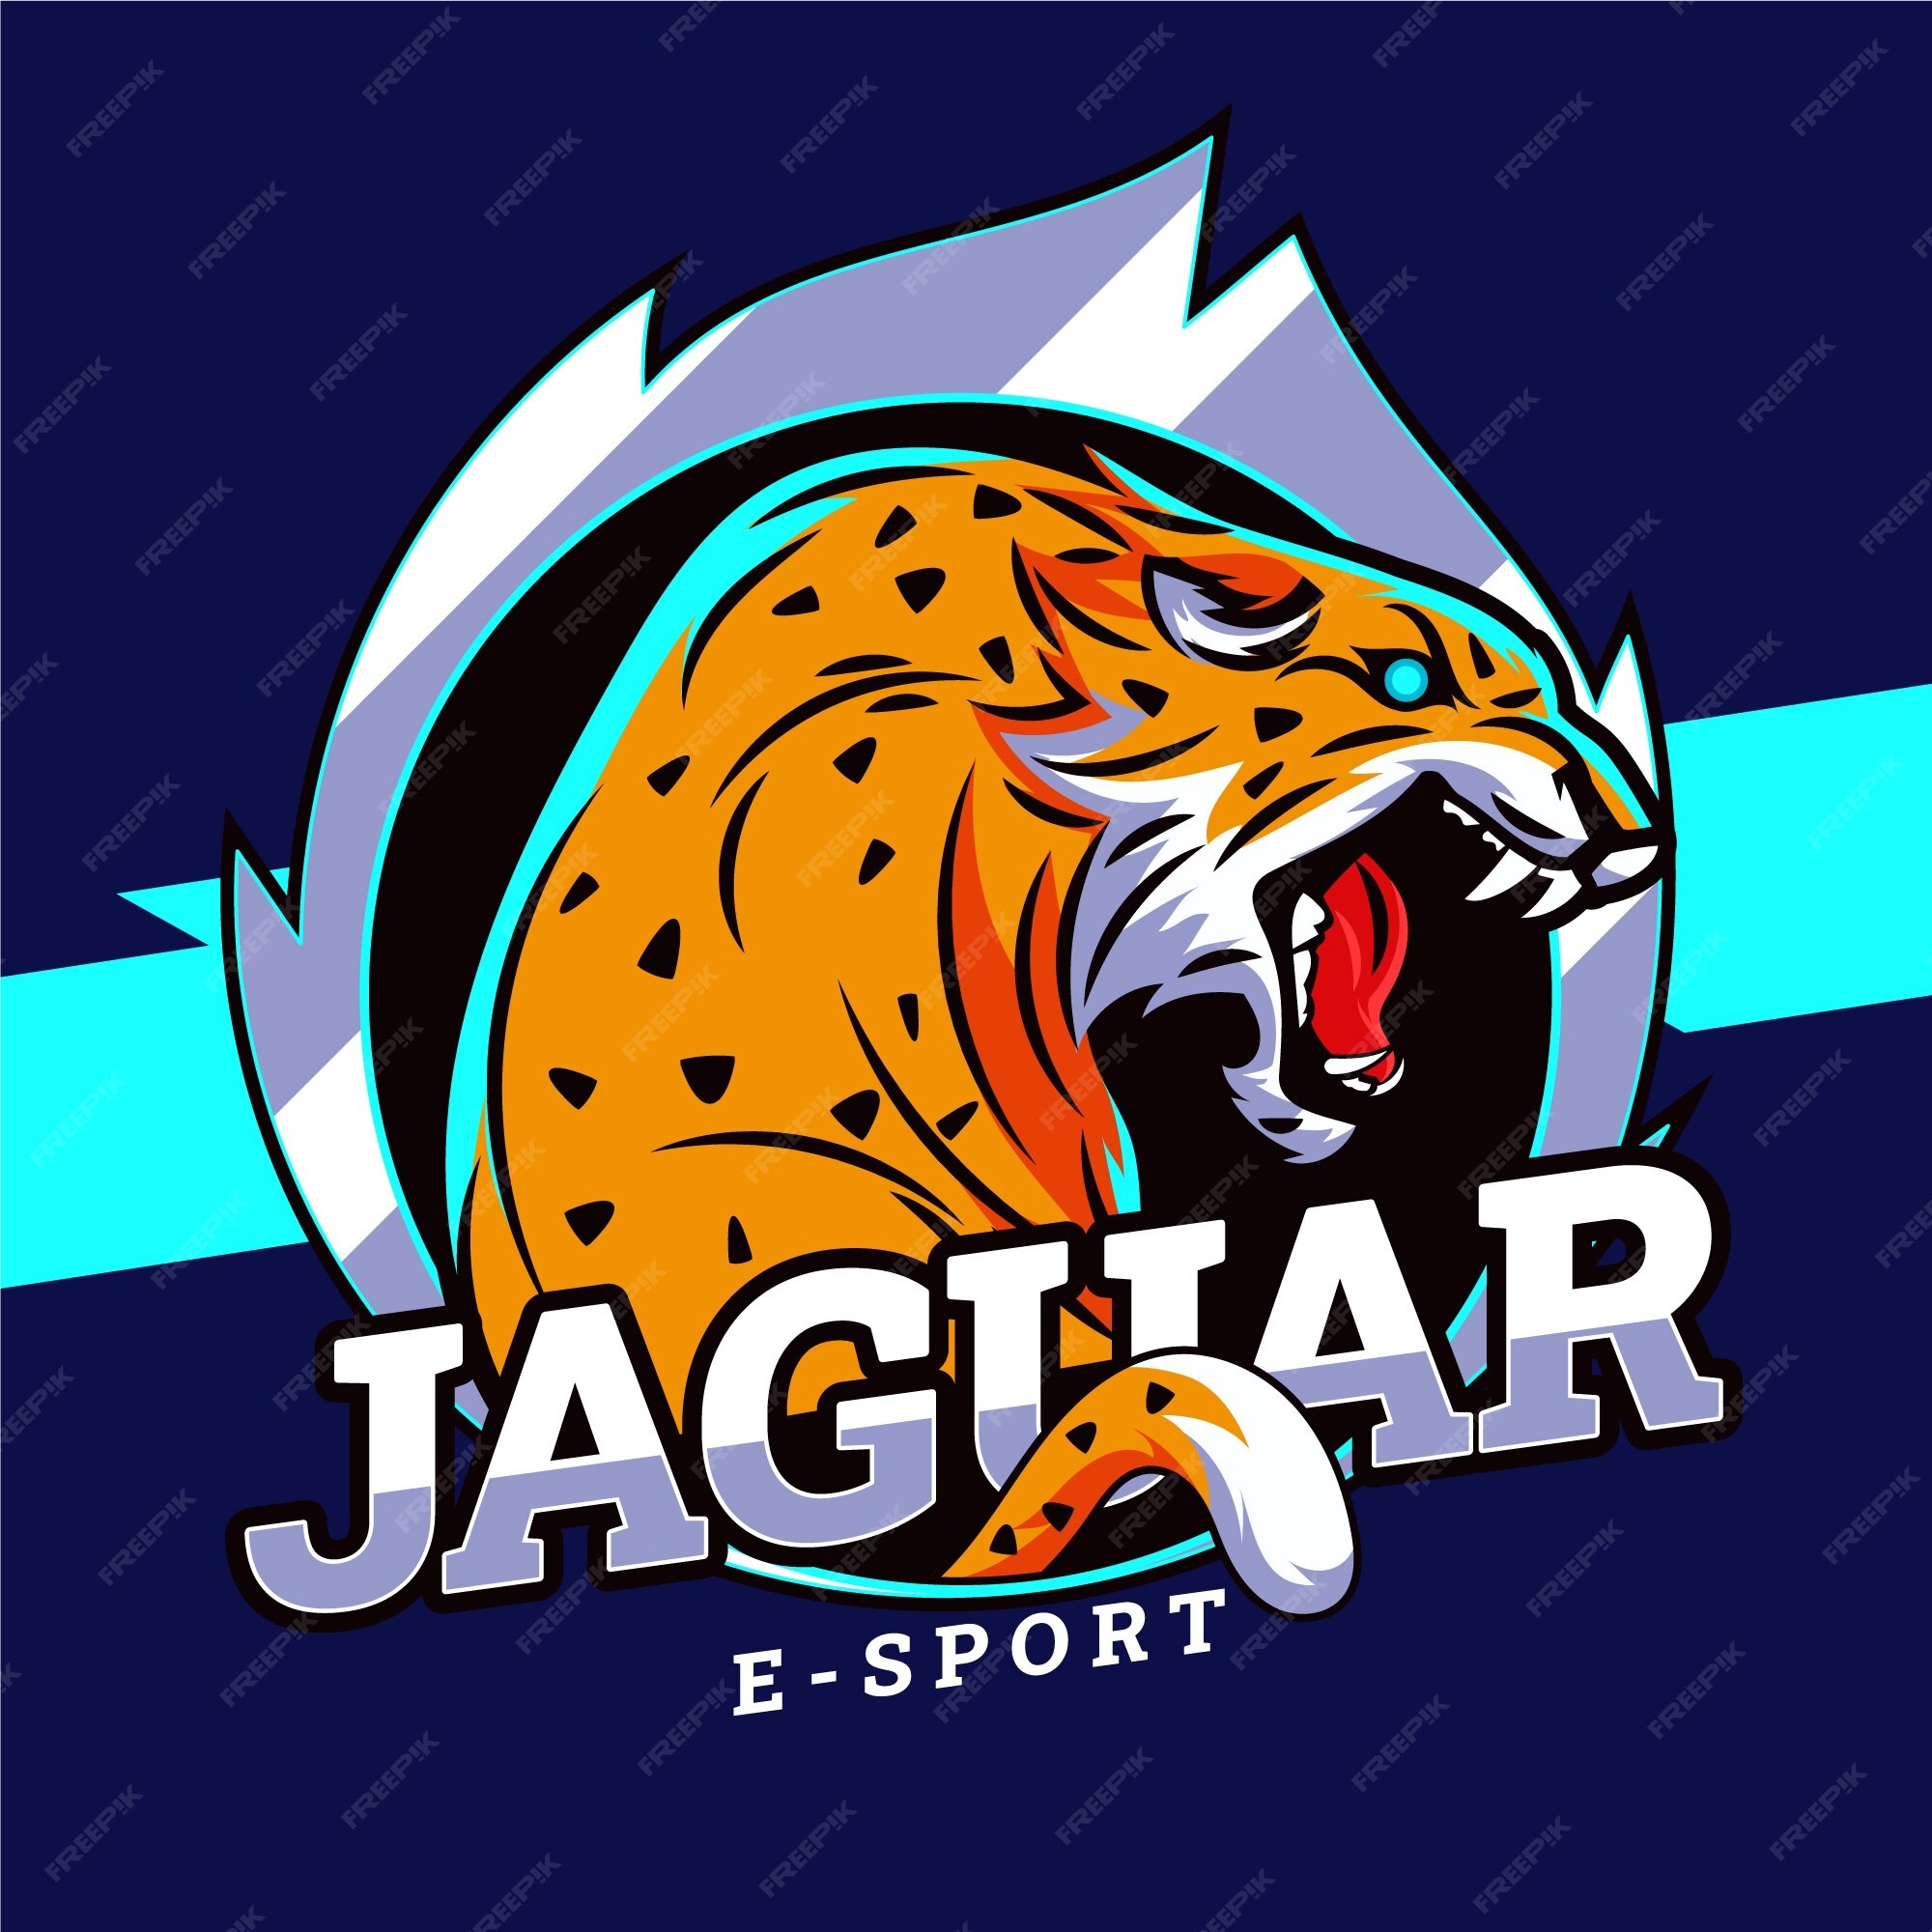 Premium Vector | Flat design jaguar logo